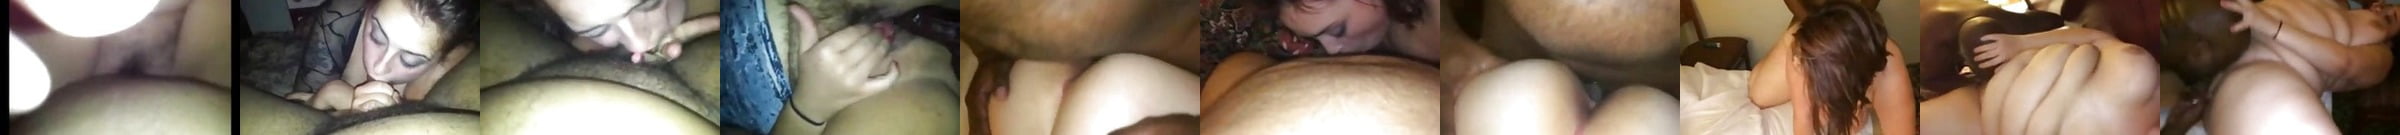 Free Interracial Swingers Porn Videos Xhamster